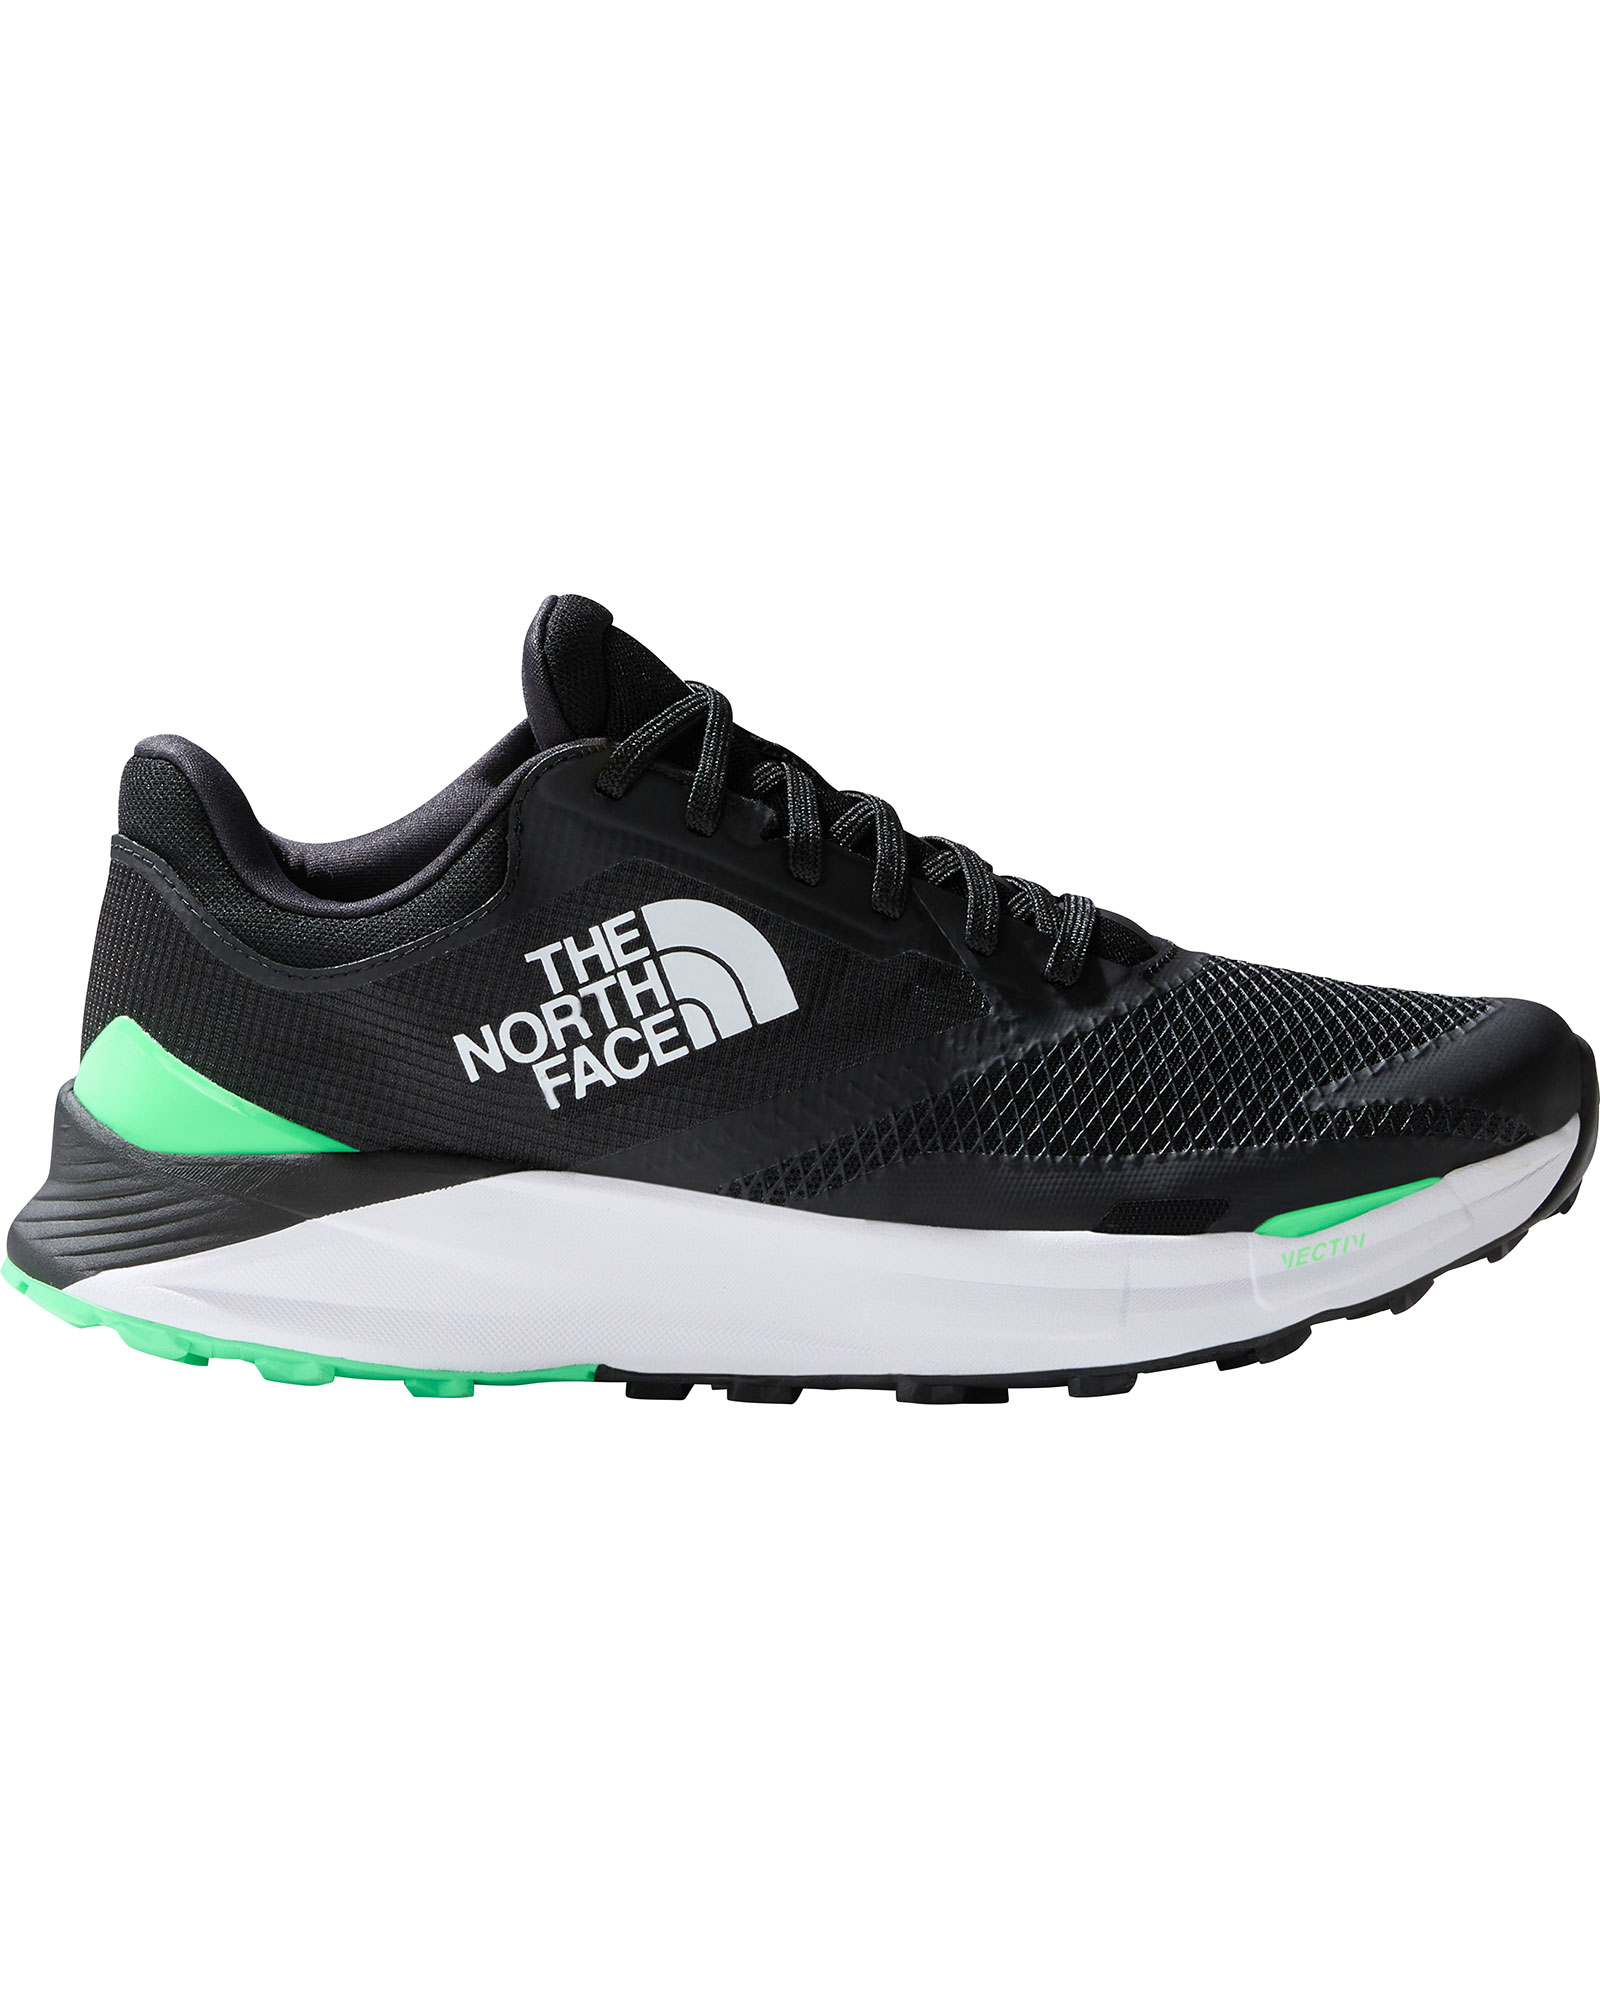 The North Face Vectiv Enduris 3 Men’s Trail Shoes - TNF Black/Chlorophyll Green UK 9